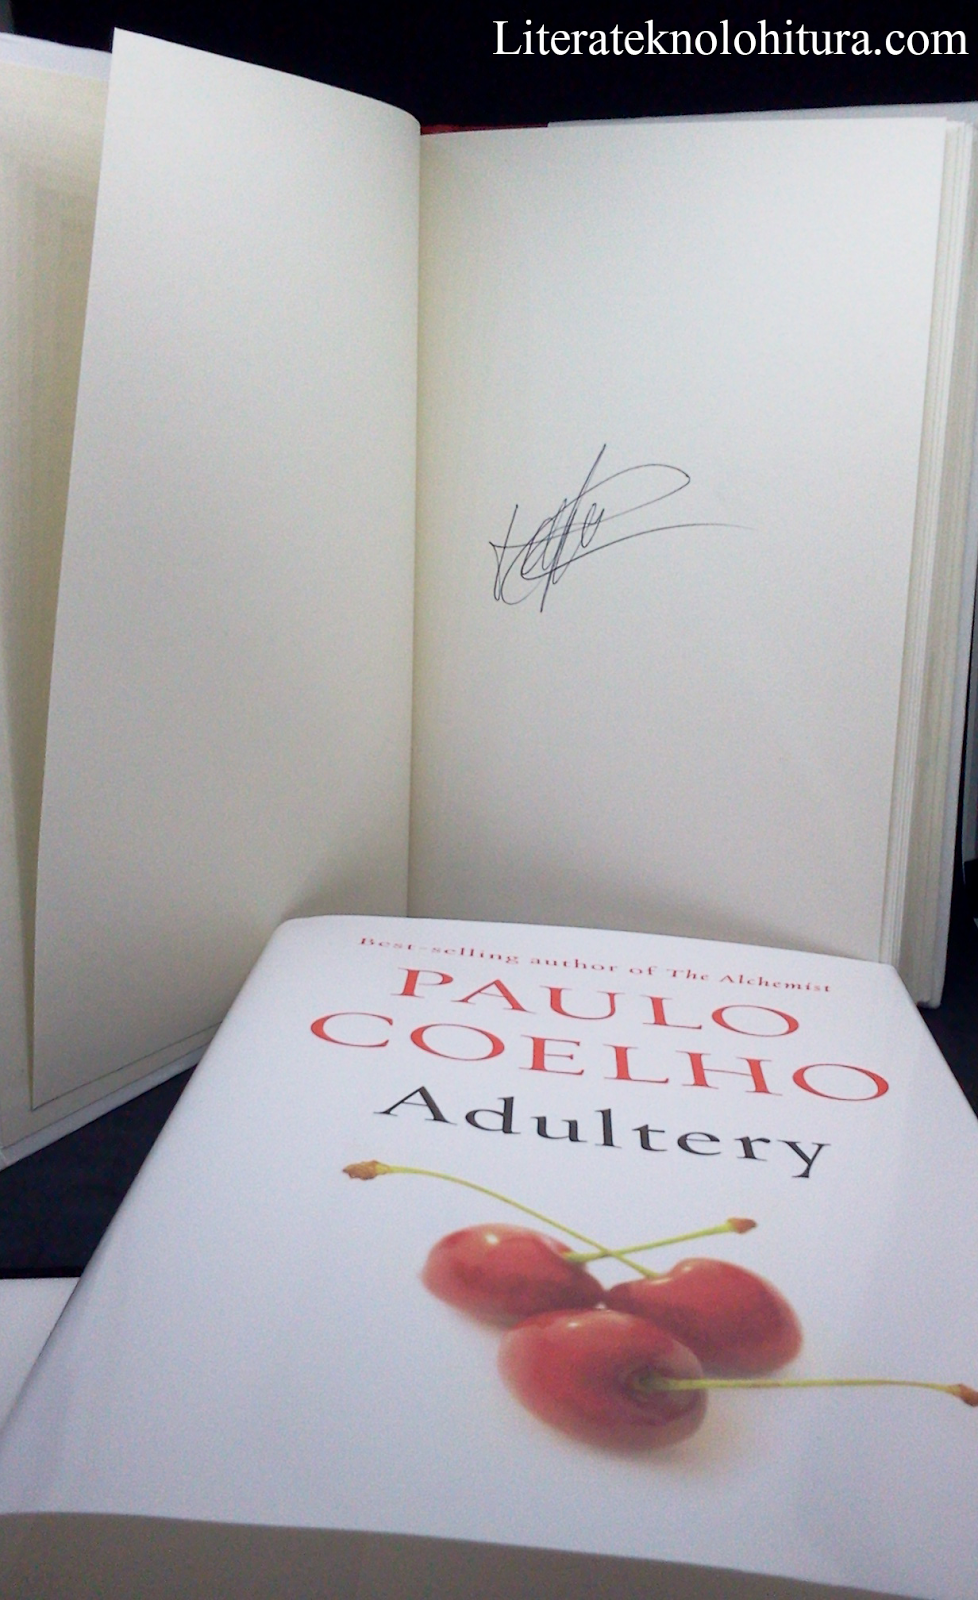 Paulo Coelho's Adultery Autographed